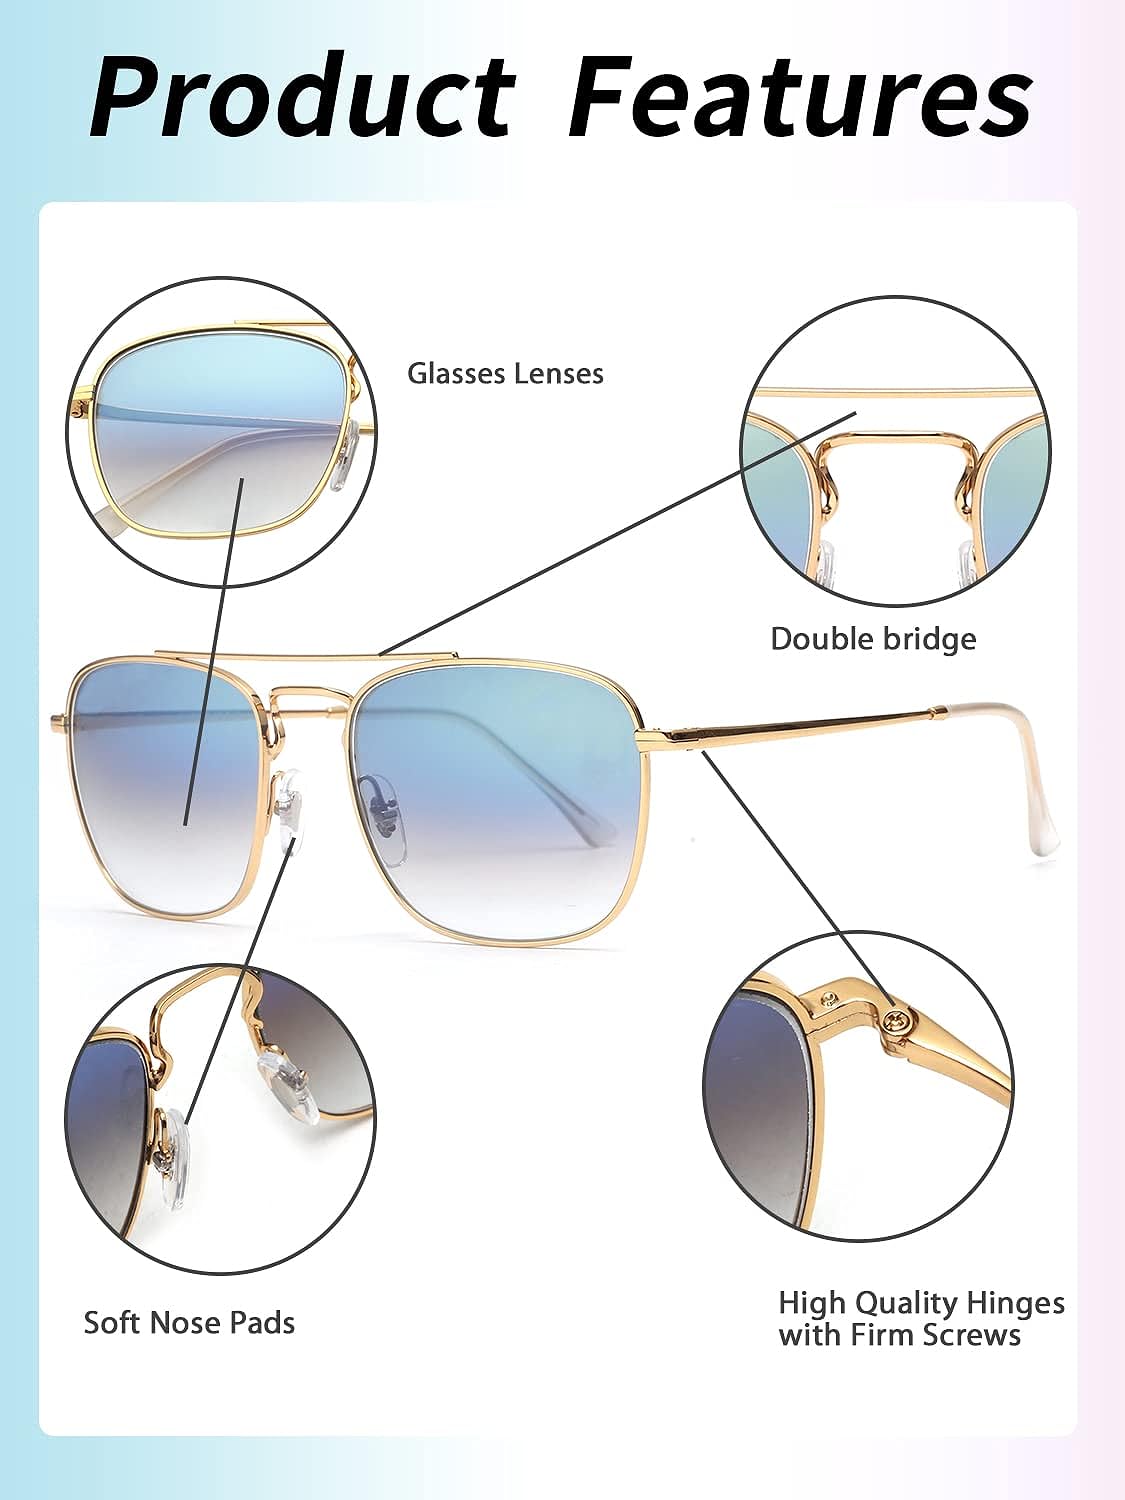 JIM HALO Retro Square Aviator Sunglasses Premium Glass Lens Flat Metal Eyewear Men Women (Gold/Gradient Blue)